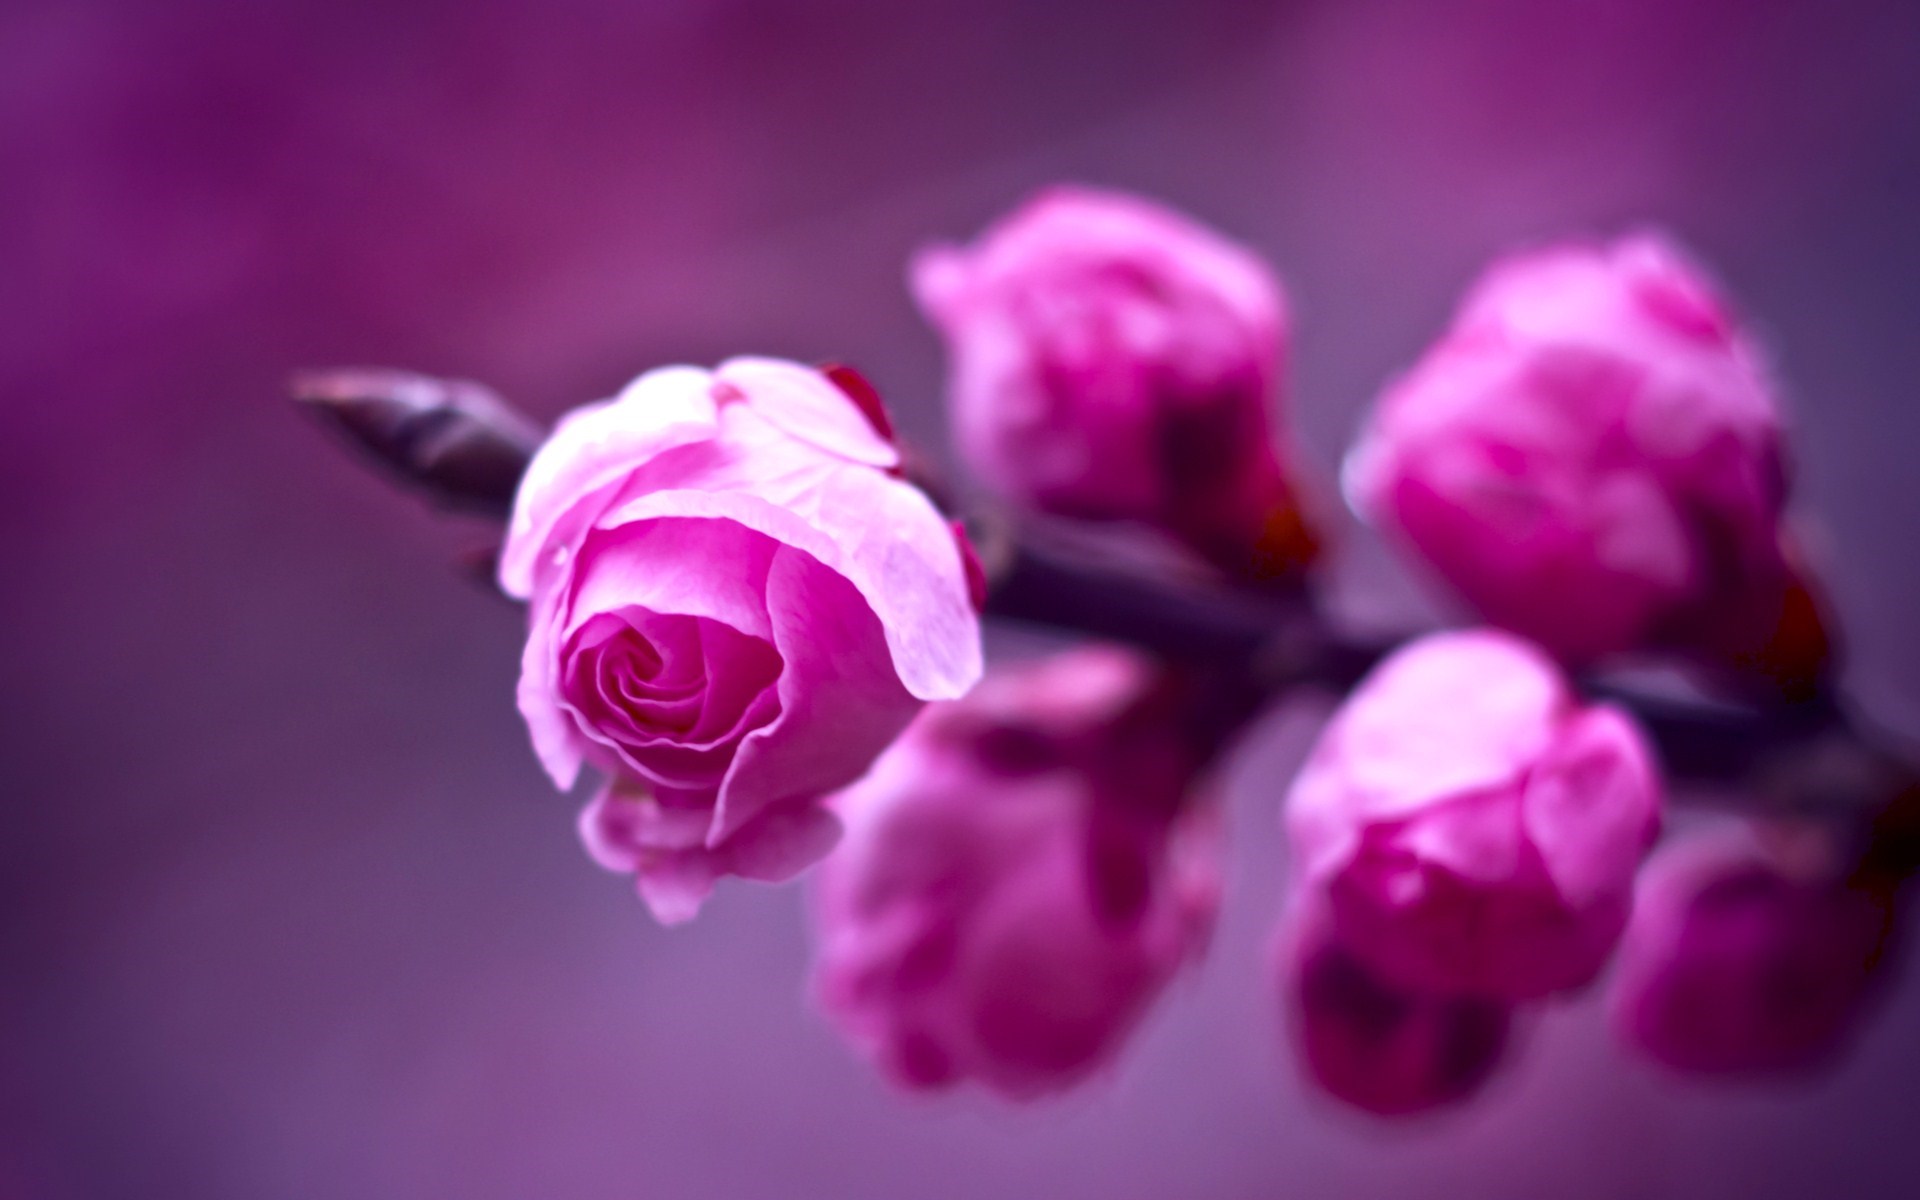 rose flower wallpaper hd descarga gratuita,rosado,violeta,flor,pétalo,púrpura